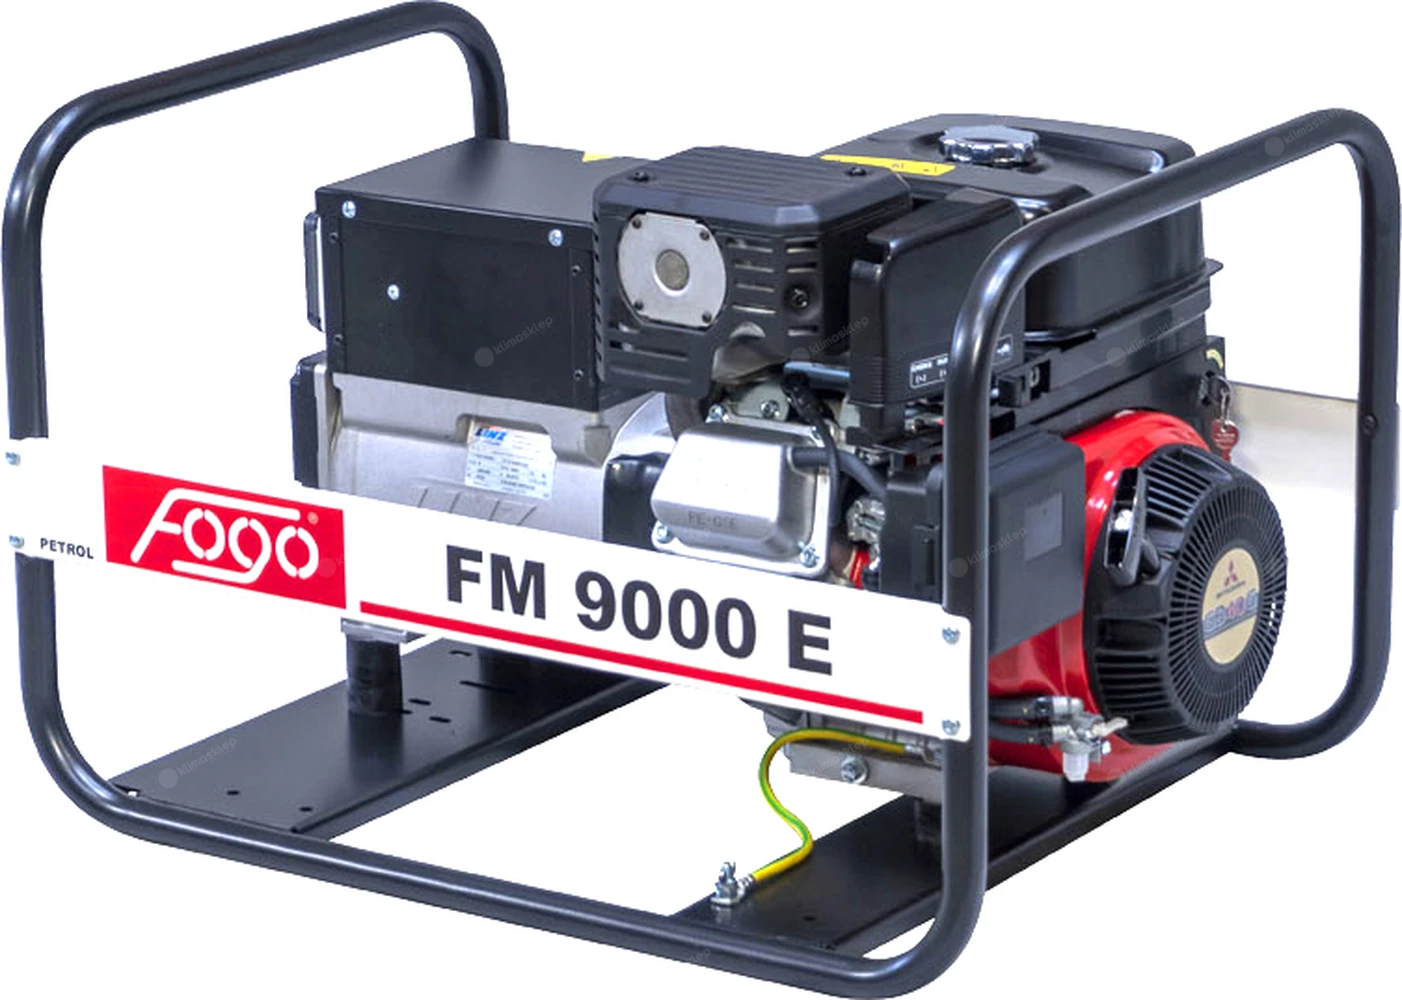 Agregat prądotwórczy Fogo FM 9000 E o mocy 6,1kW